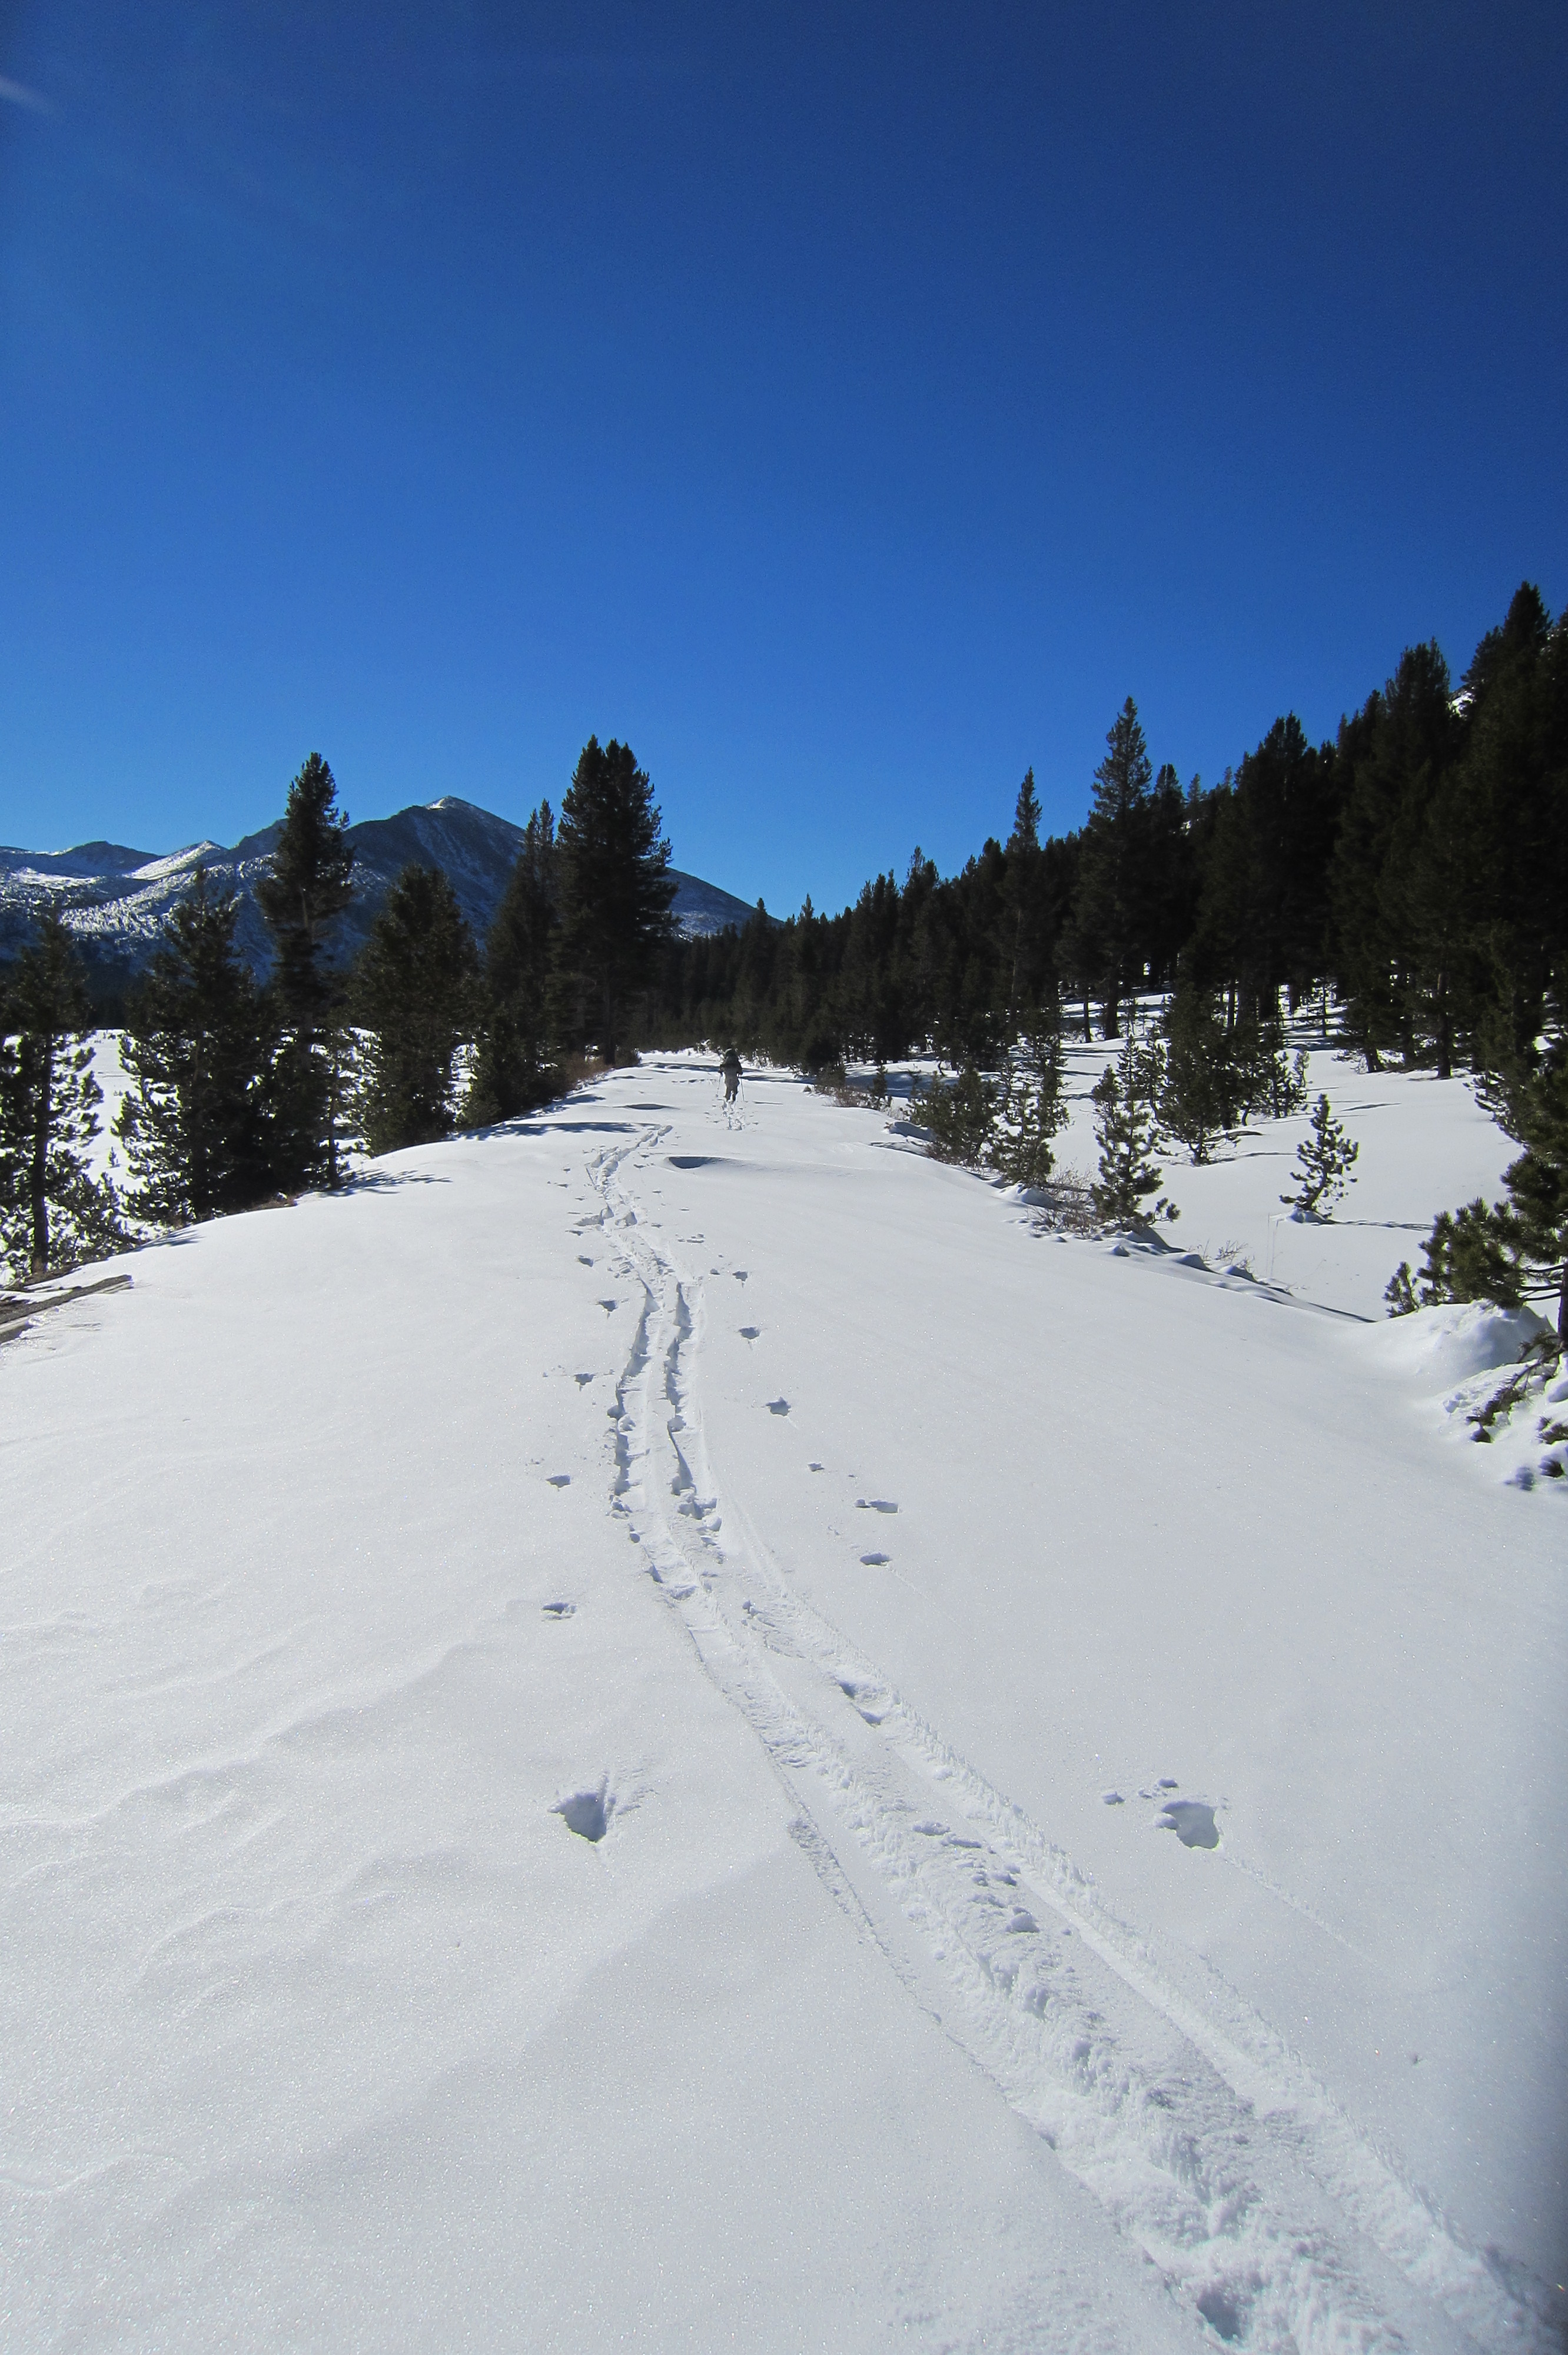 Skiing on the Tioga Road near Dana Meadows, December 14, 2013